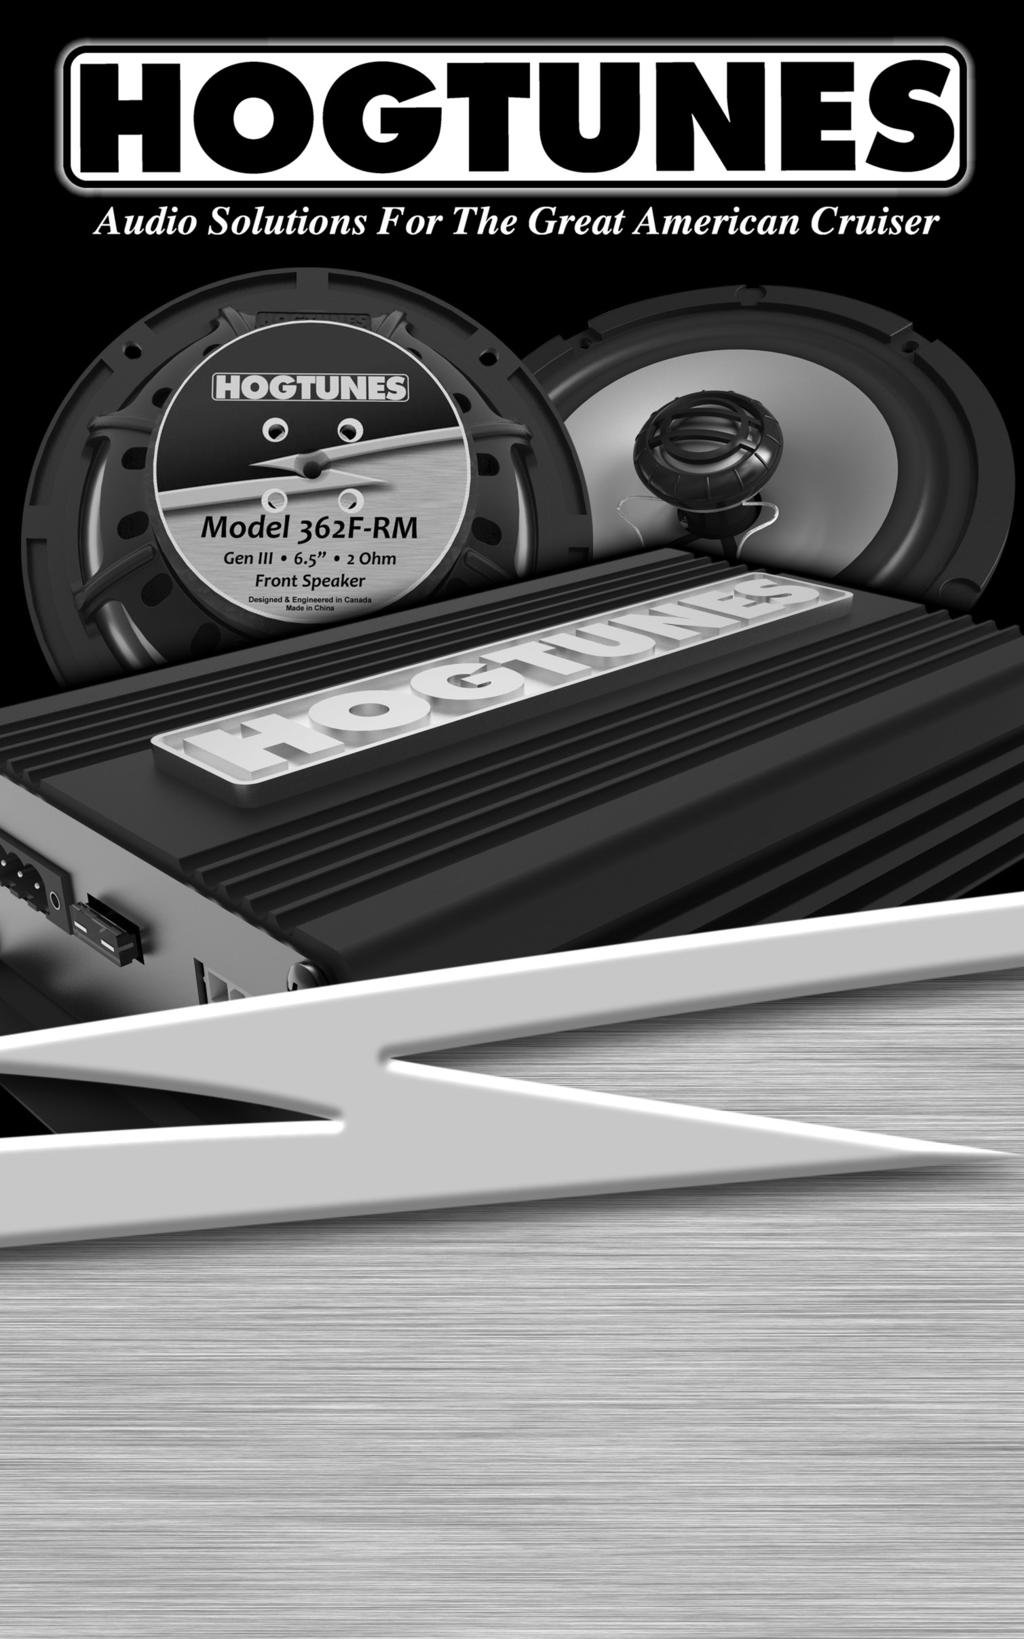 REV 200SG Kit-RM High Performance Front Speaker Kit with 200 Watt Amplifier For Use Use